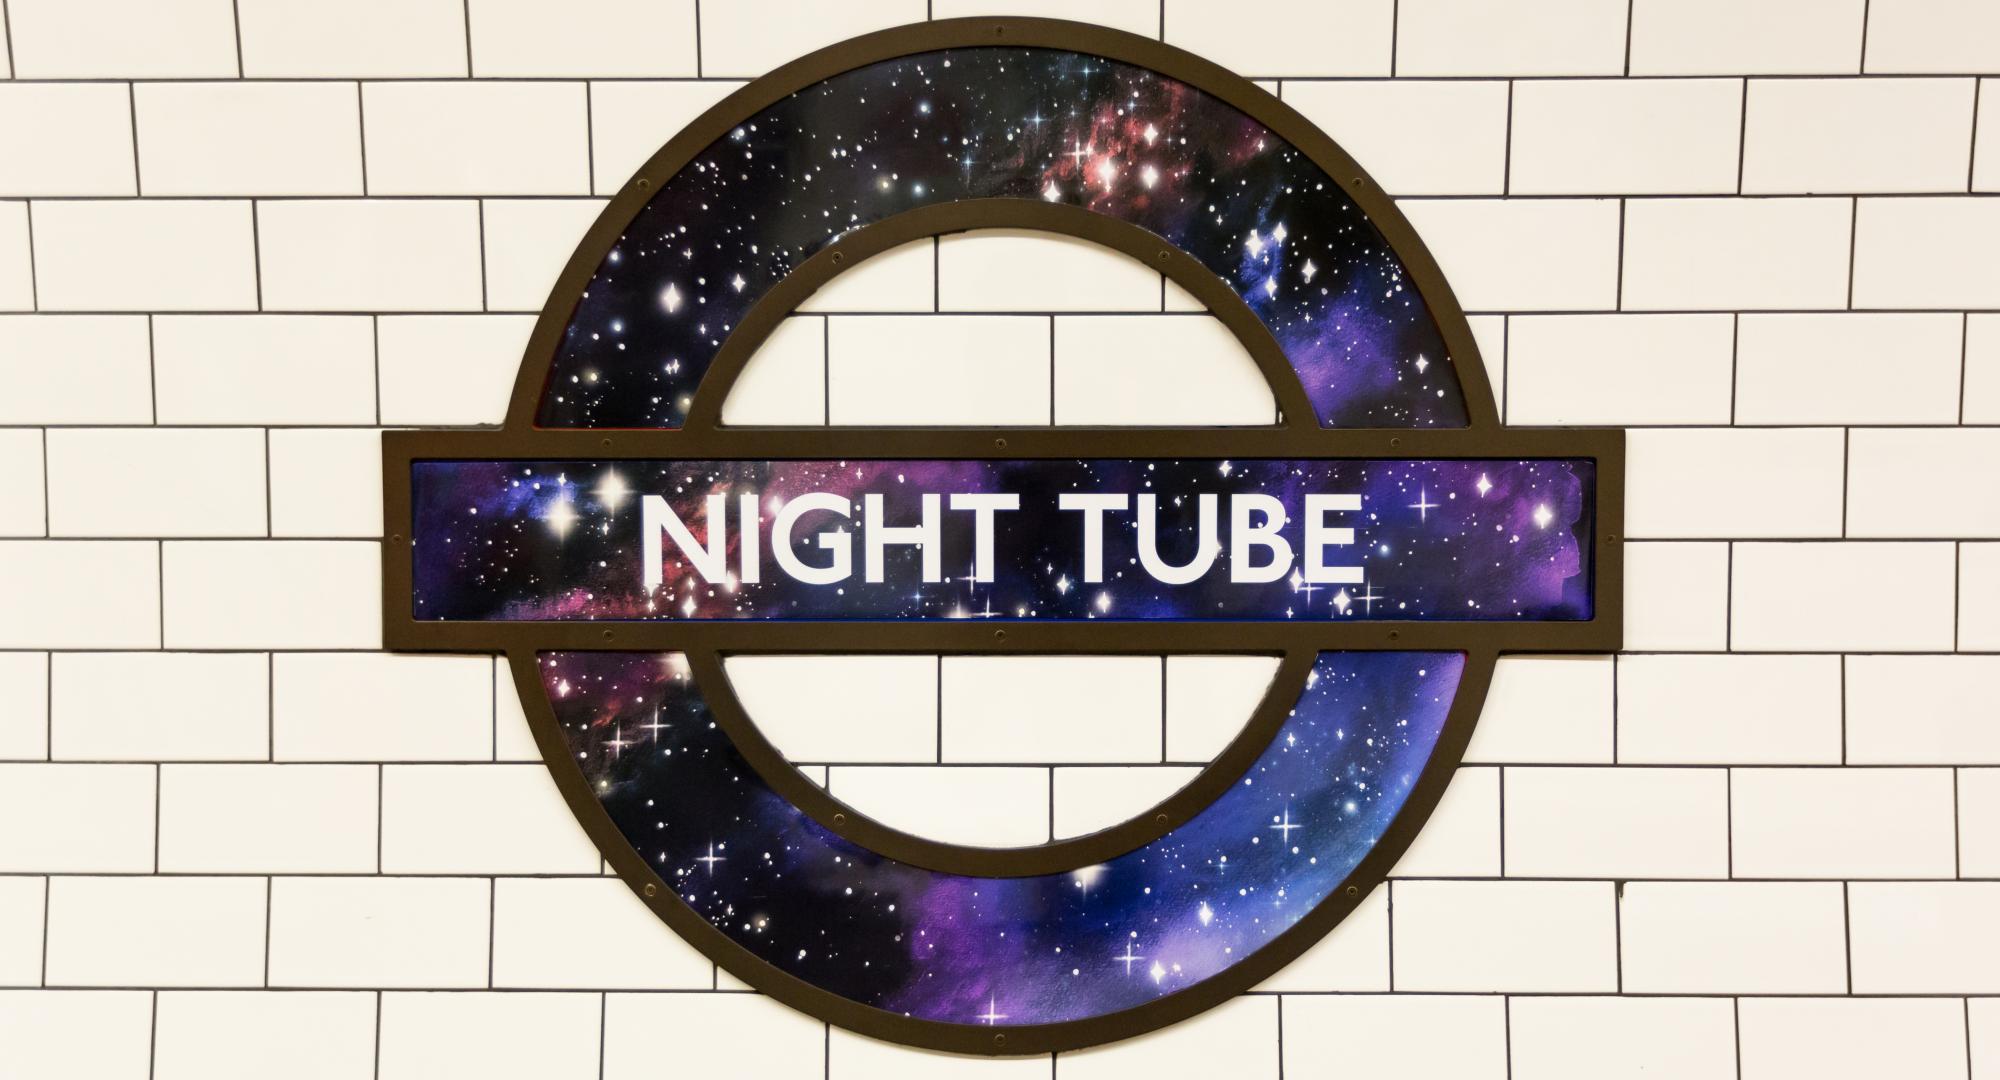 Night Tube via TfL 